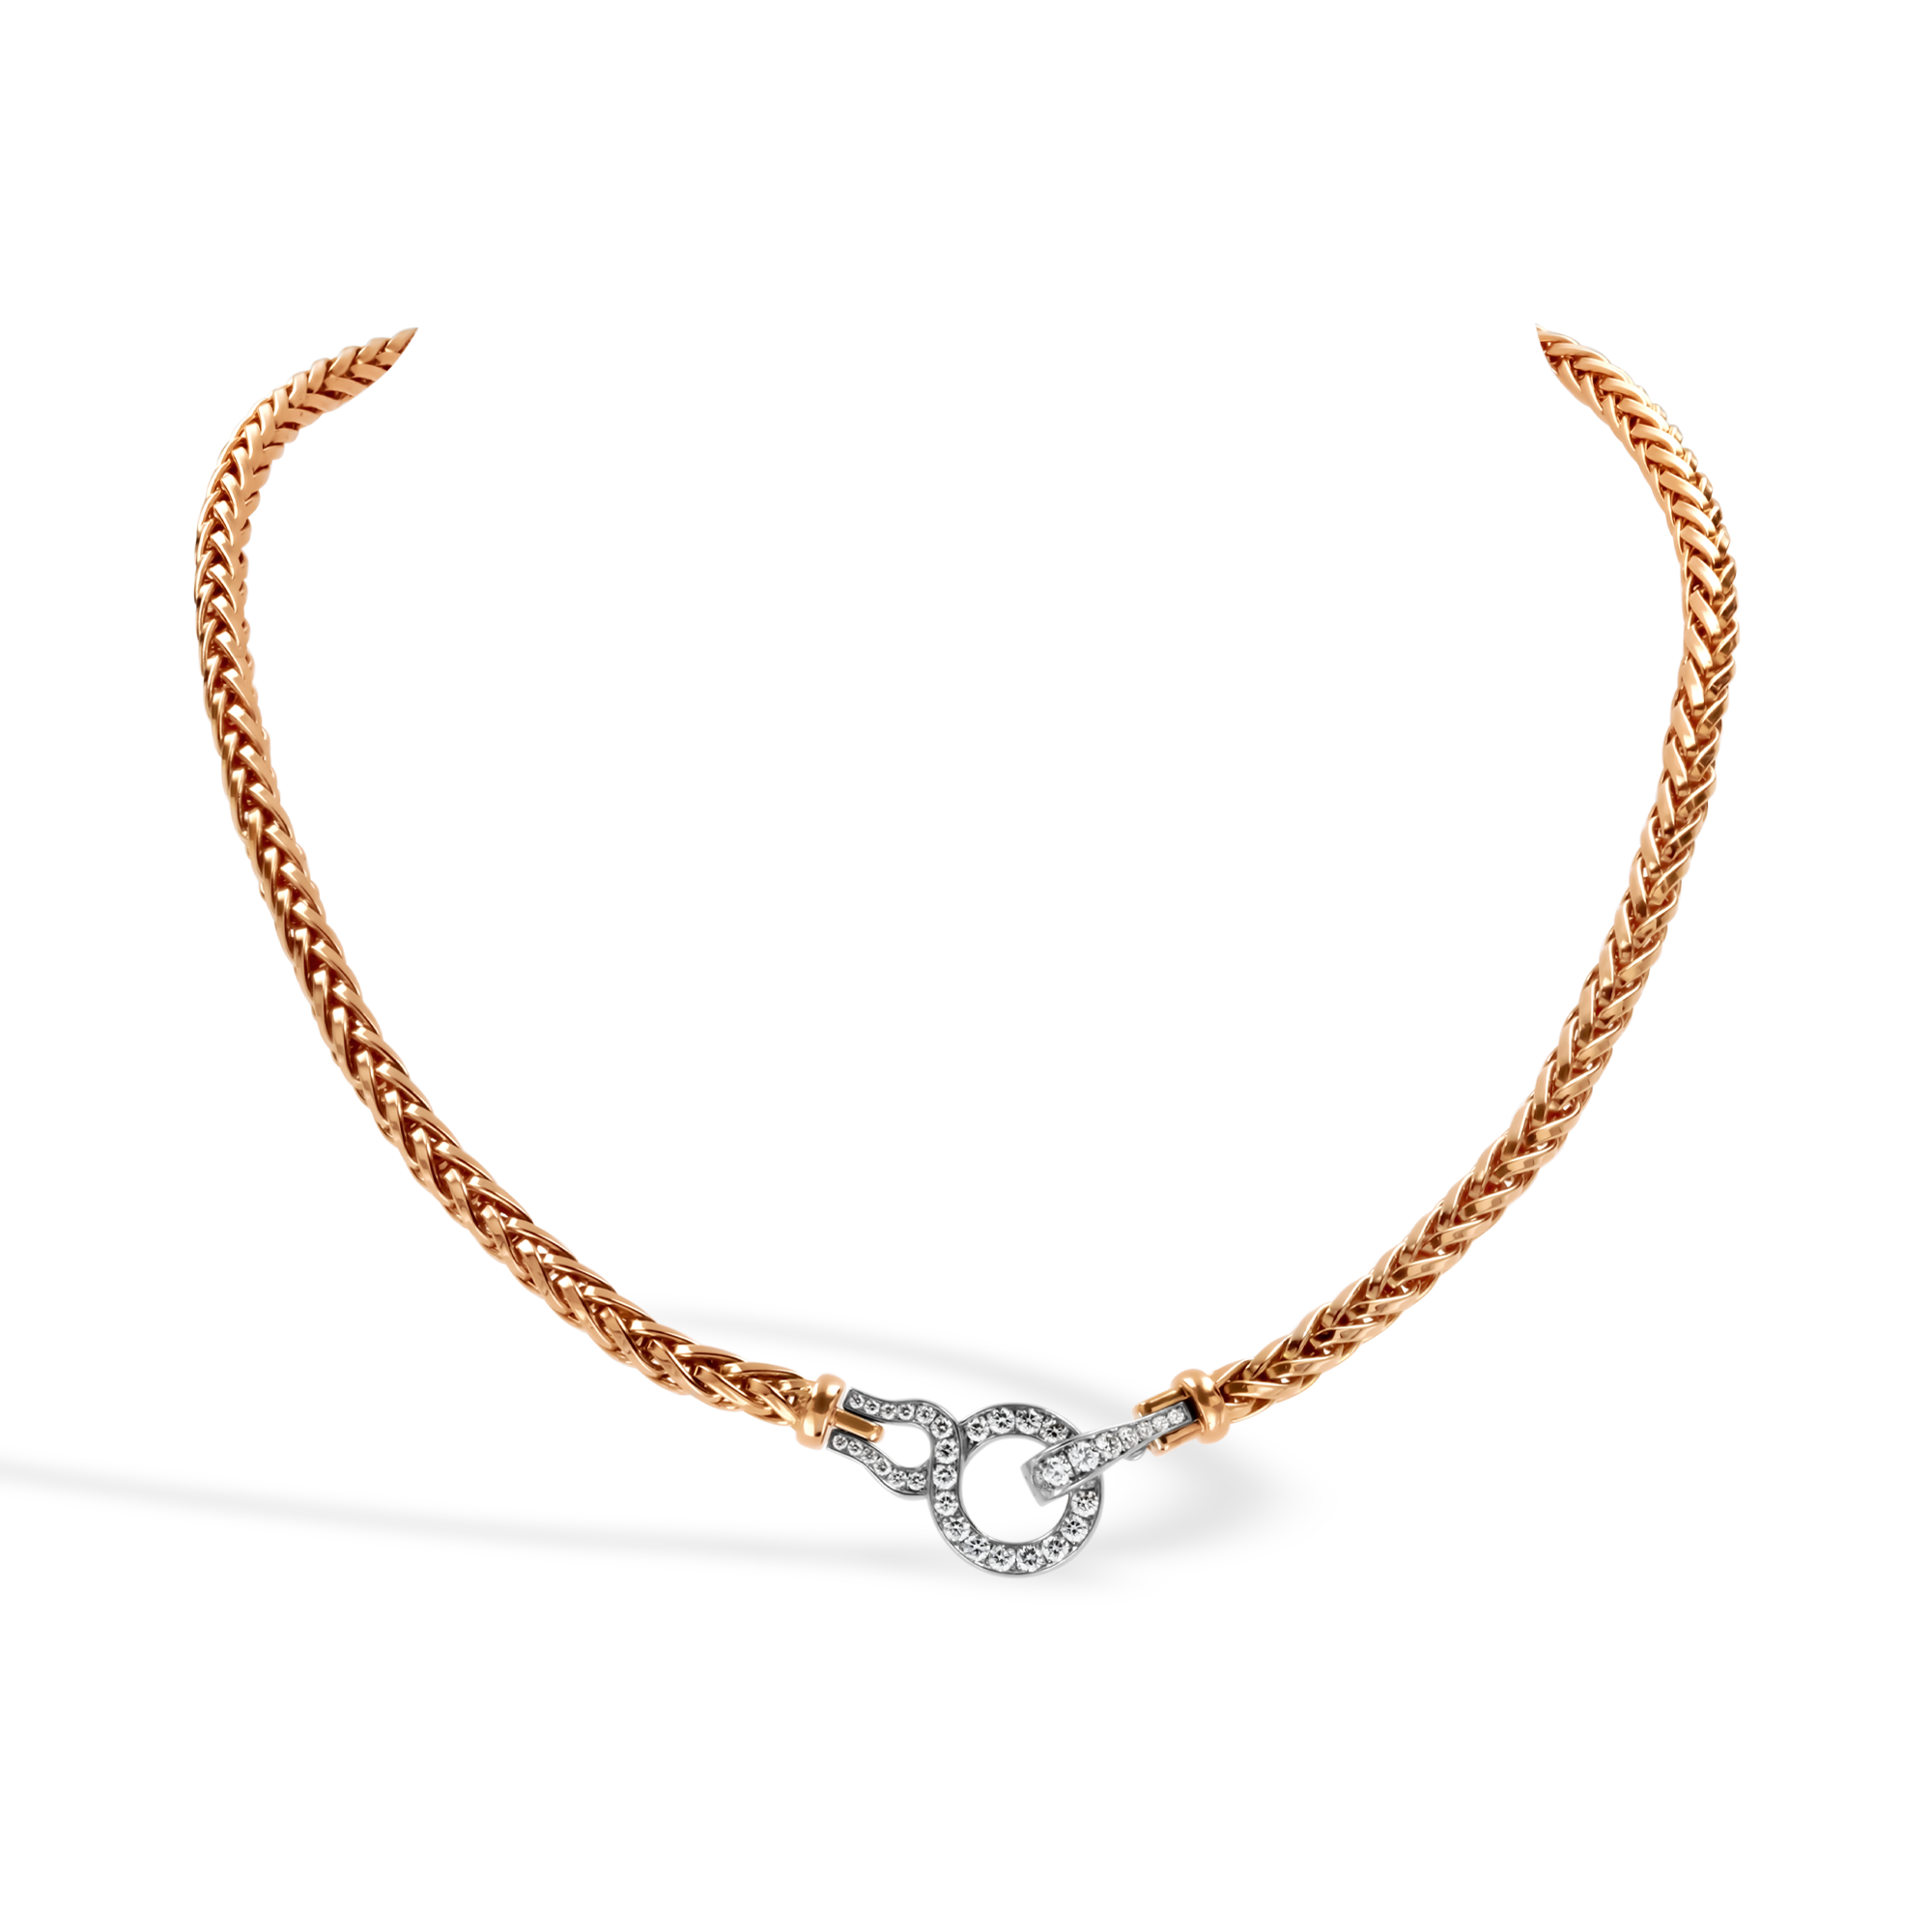 English Chain Necklace with Diamond Clasp Brilliant Cut, Grain Set_1